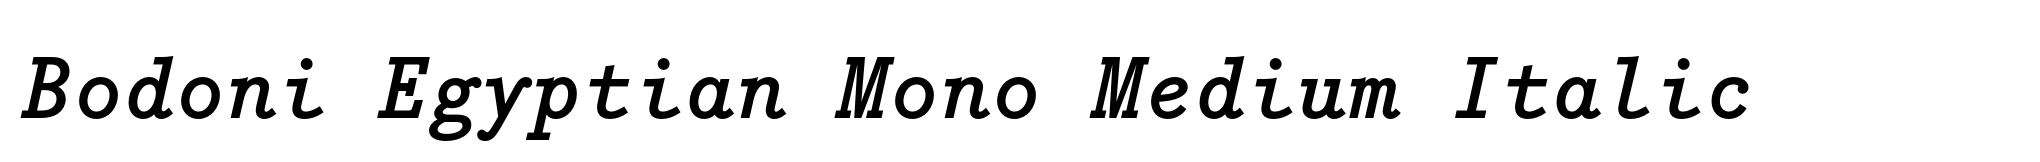 Bodoni Egyptian Mono Medium Italic image